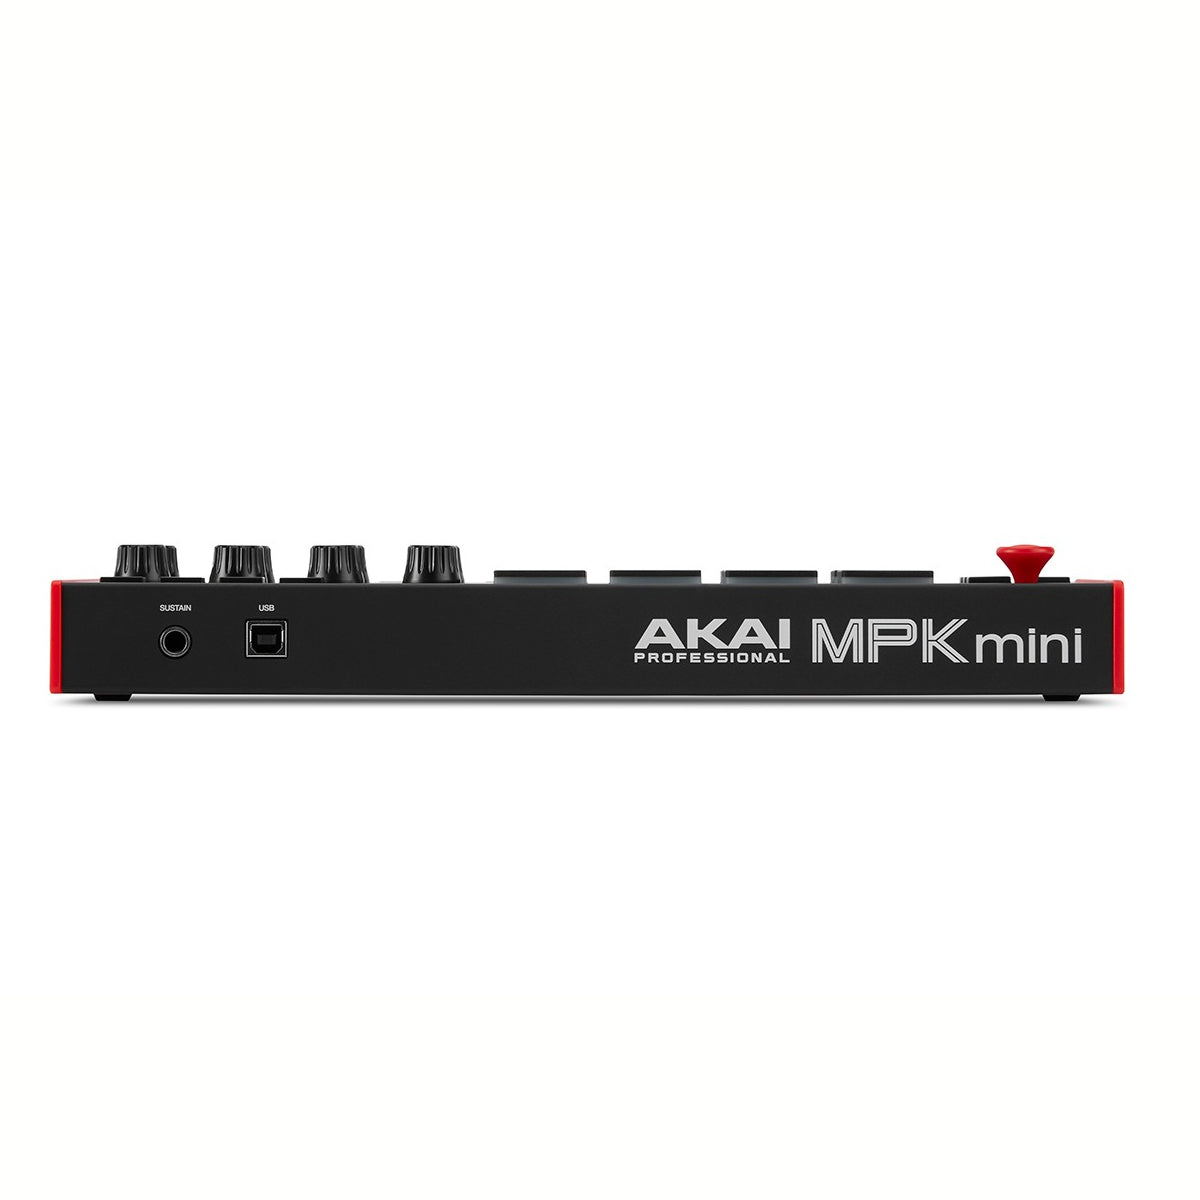 Akai MPK Mini V3 Compact USB/MIDI Controller 25 mini Keys + MPC Drum Pads